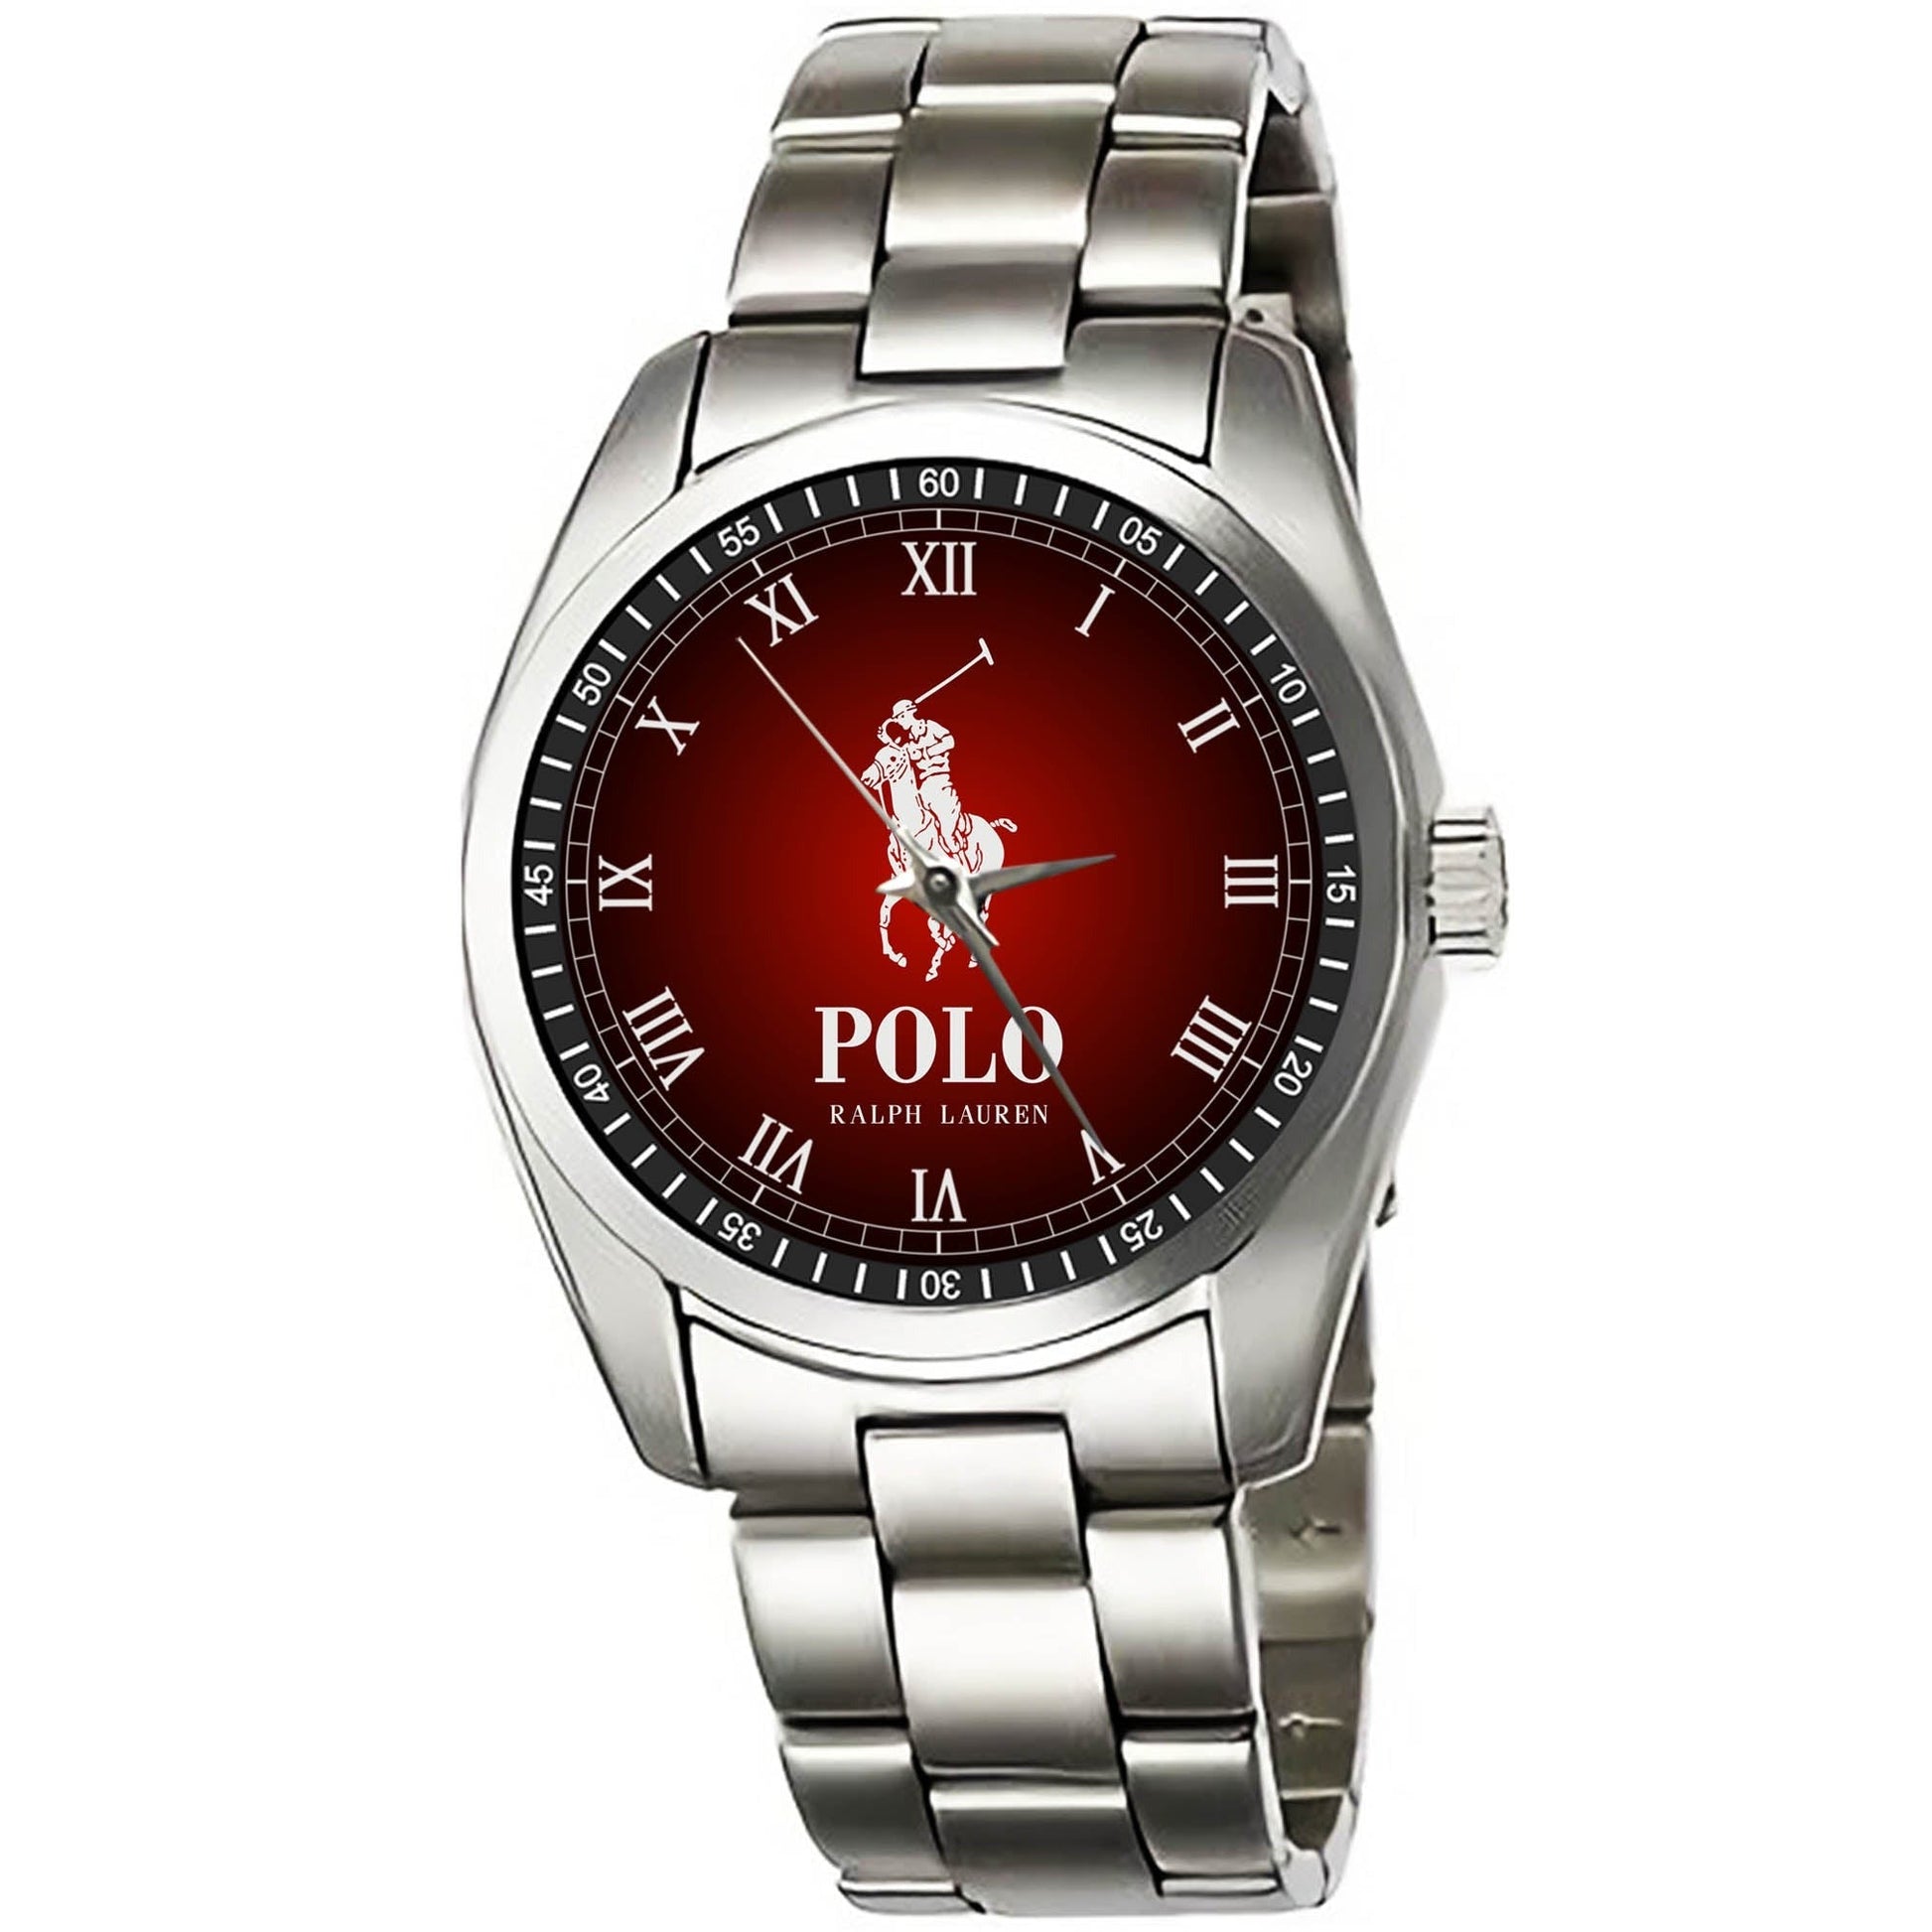 Polo Ralph Lauren Watches KP622